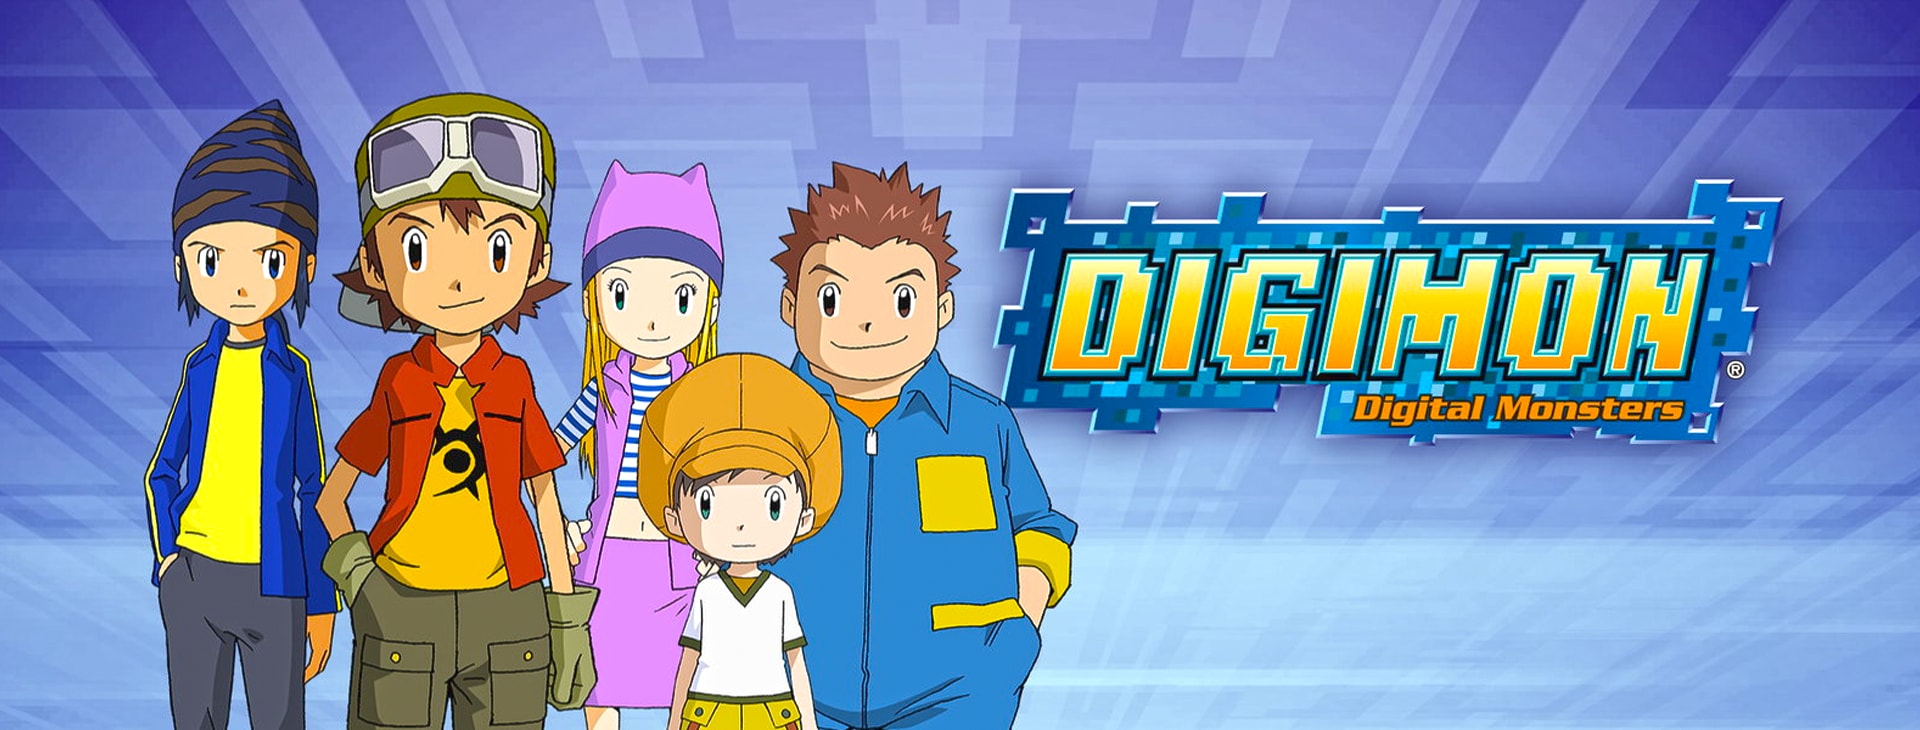 Assistir Digimon Frontier Dublado Episodio 3 Online